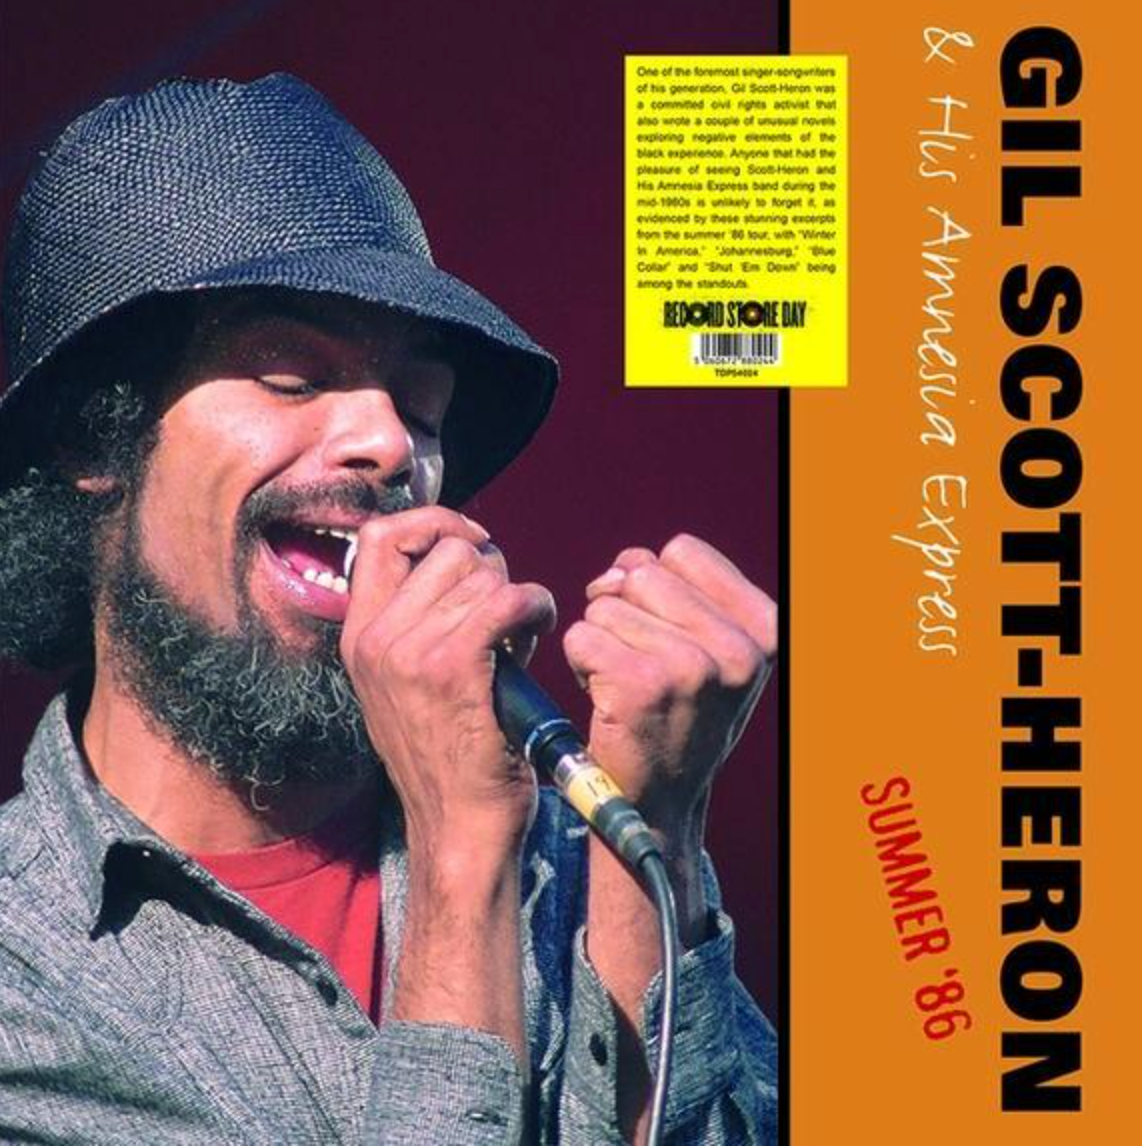 Gil Scott Heron - Summer 86 LP